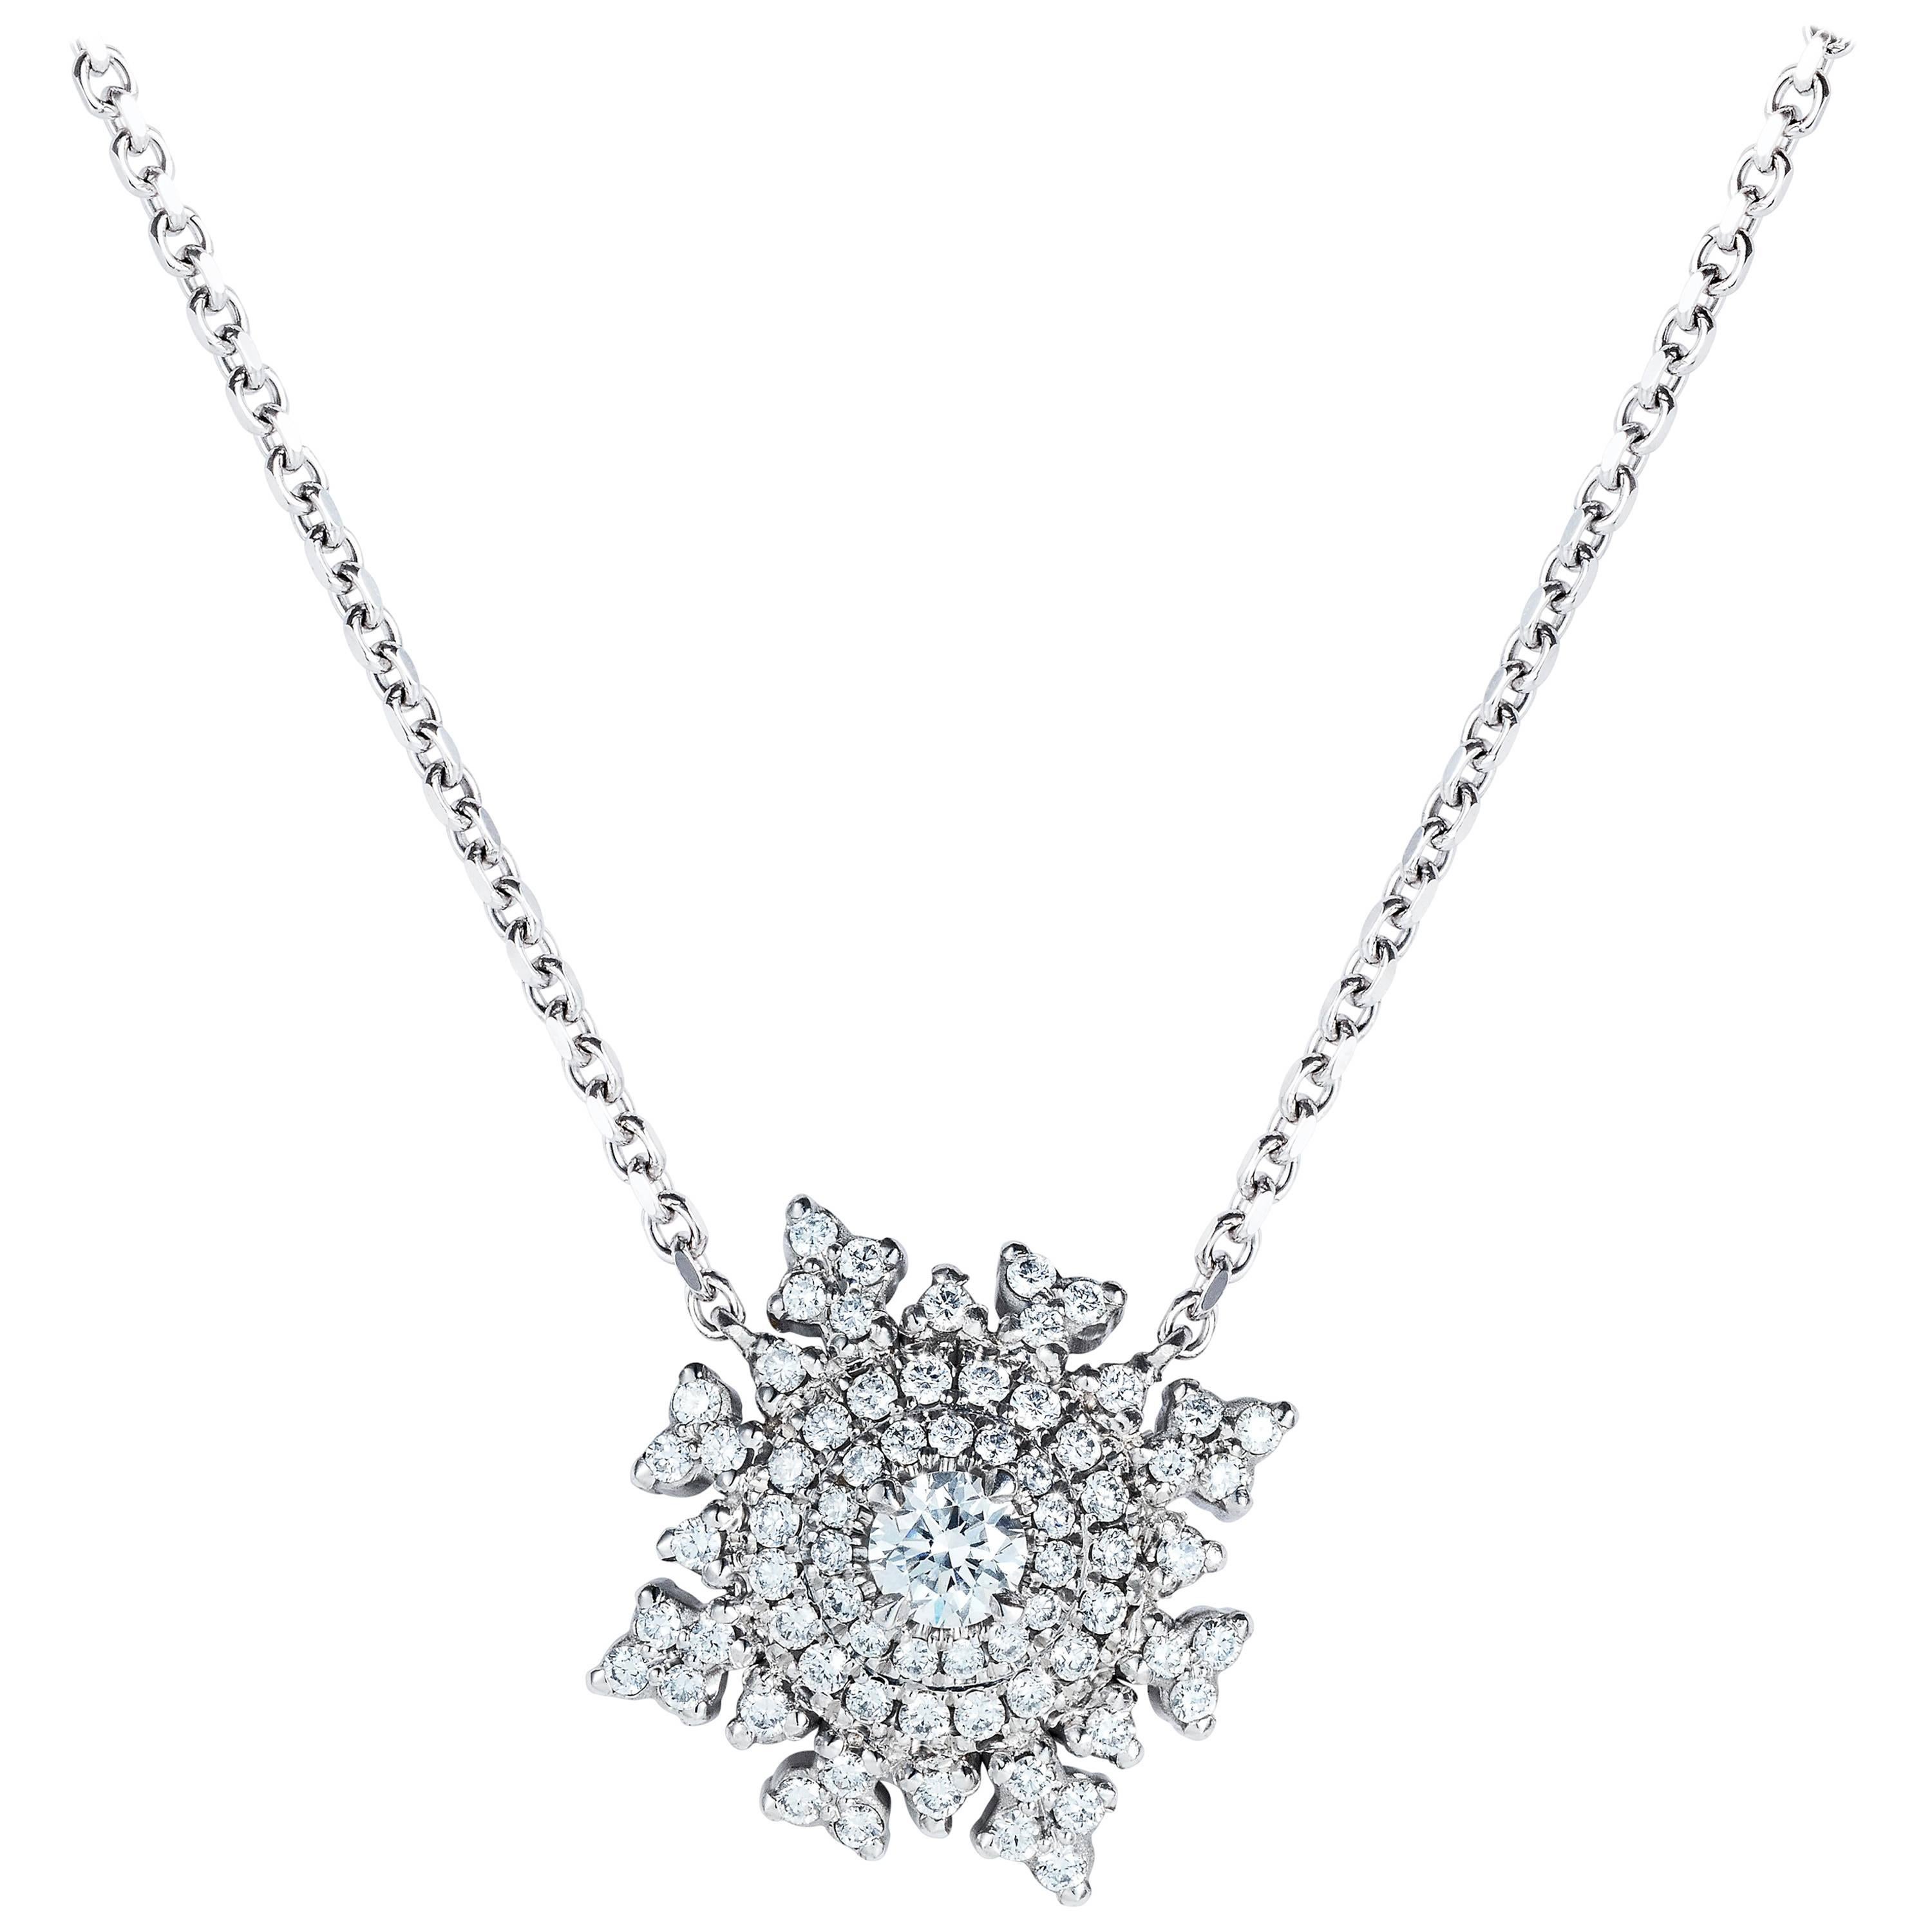 Nadine Aysoy Petite Tsarina 18 Karat White Gold and Diamond Necklace For Sale